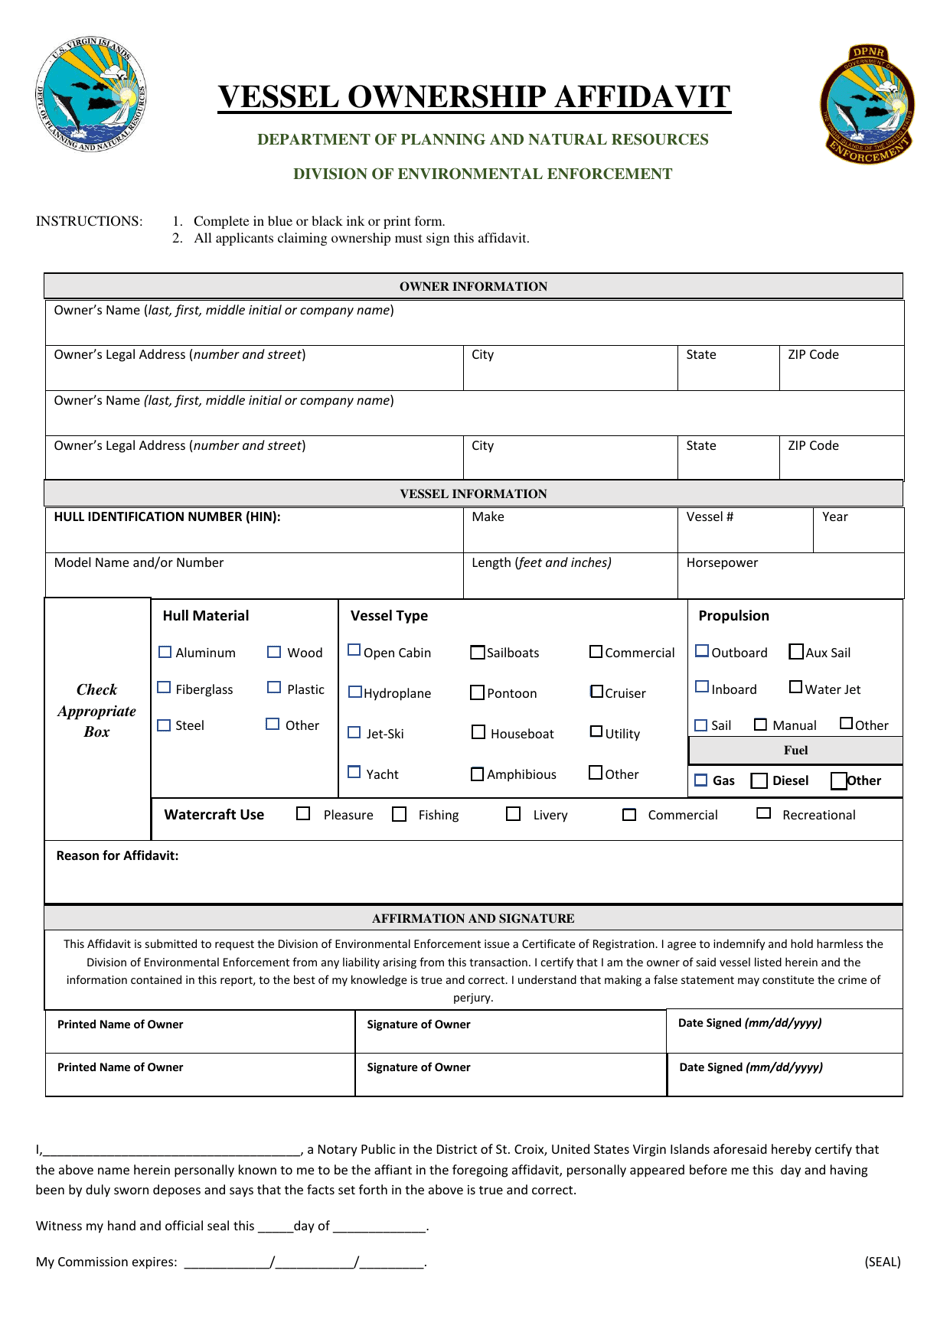 Vessel Ownership Affidavit - District of St. Croix - Virgin Islands, Page 1